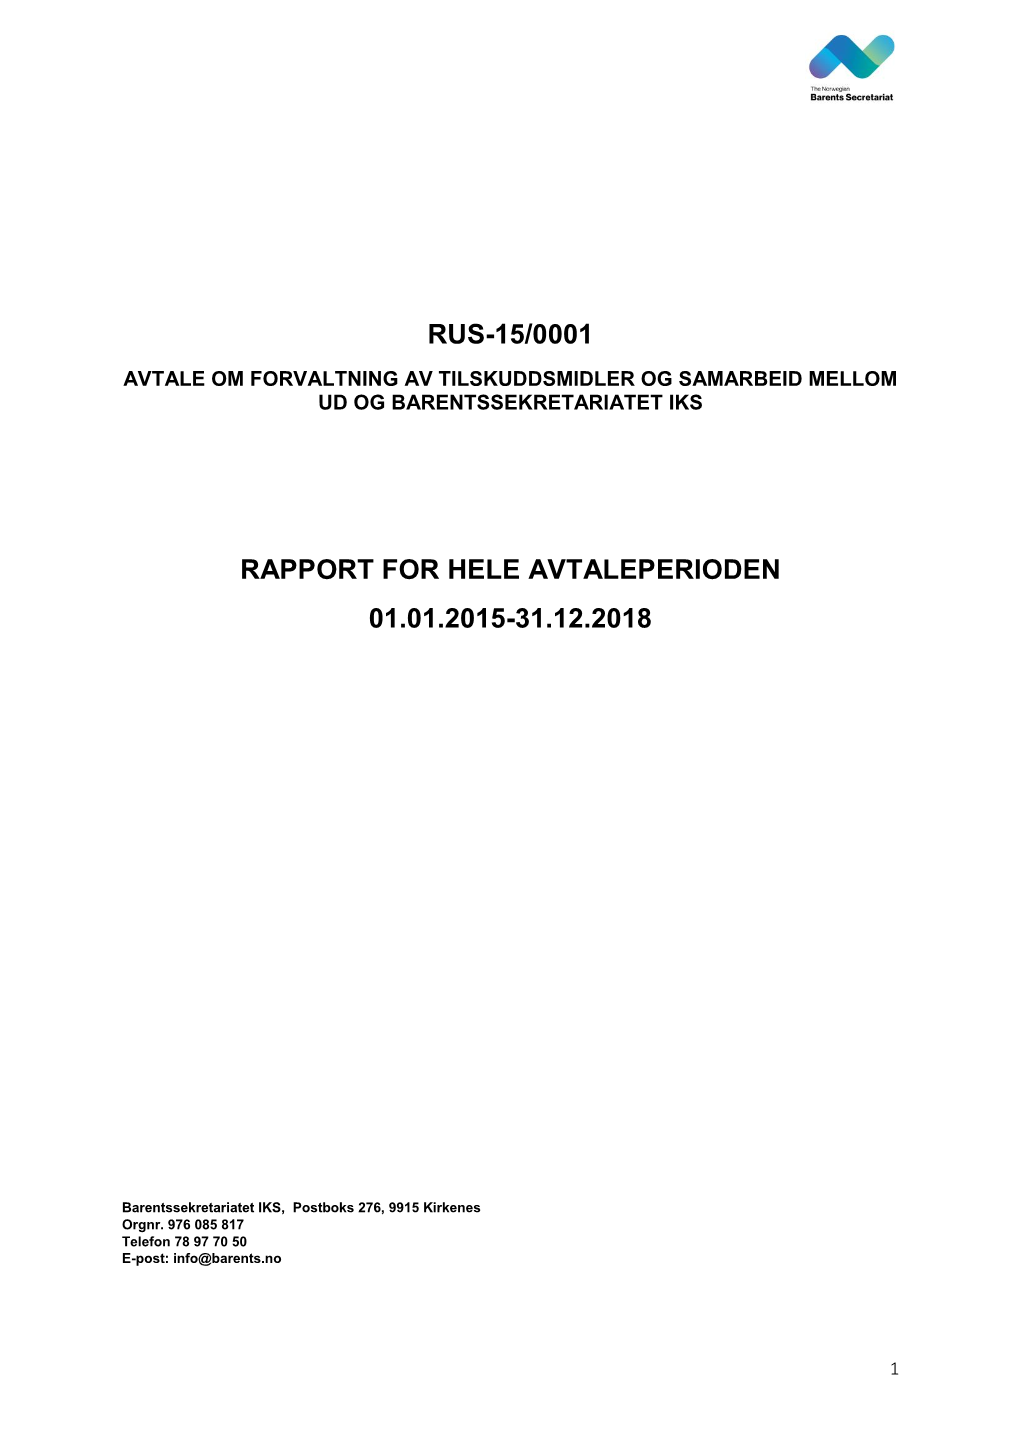 Rus-15/0001 Rapport for Hele Avtaleperioden 01.01.2015